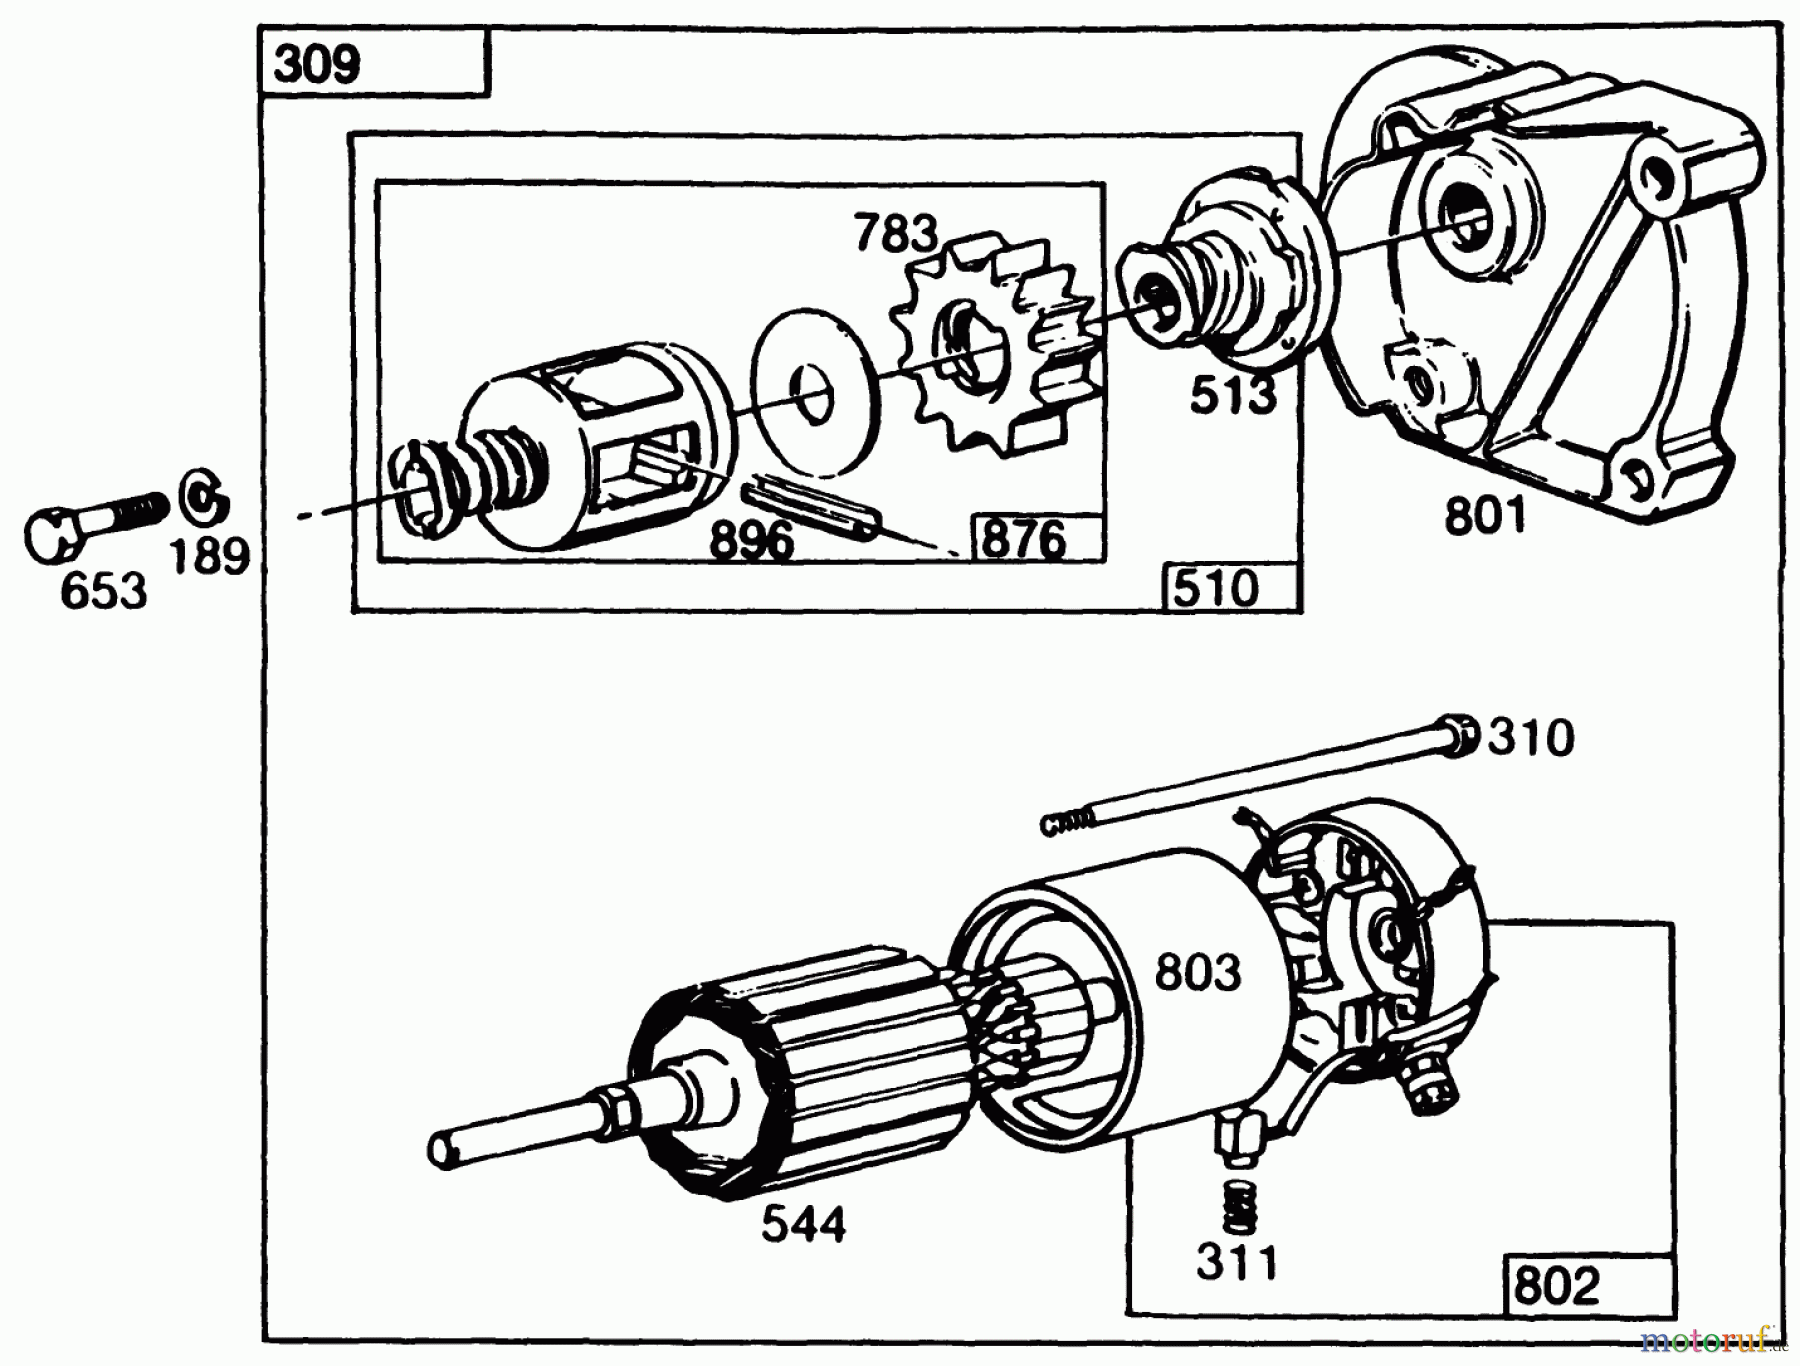  Toro Neu Mowers, Drive Unit Only 30116 - Toro Mid-Size Proline Gear Traction Unit, 16 hp, 1989 (9000001-9999999) BRIGGS & STRATTON ENGINE MODEL NO. 402707-0158-01 #4